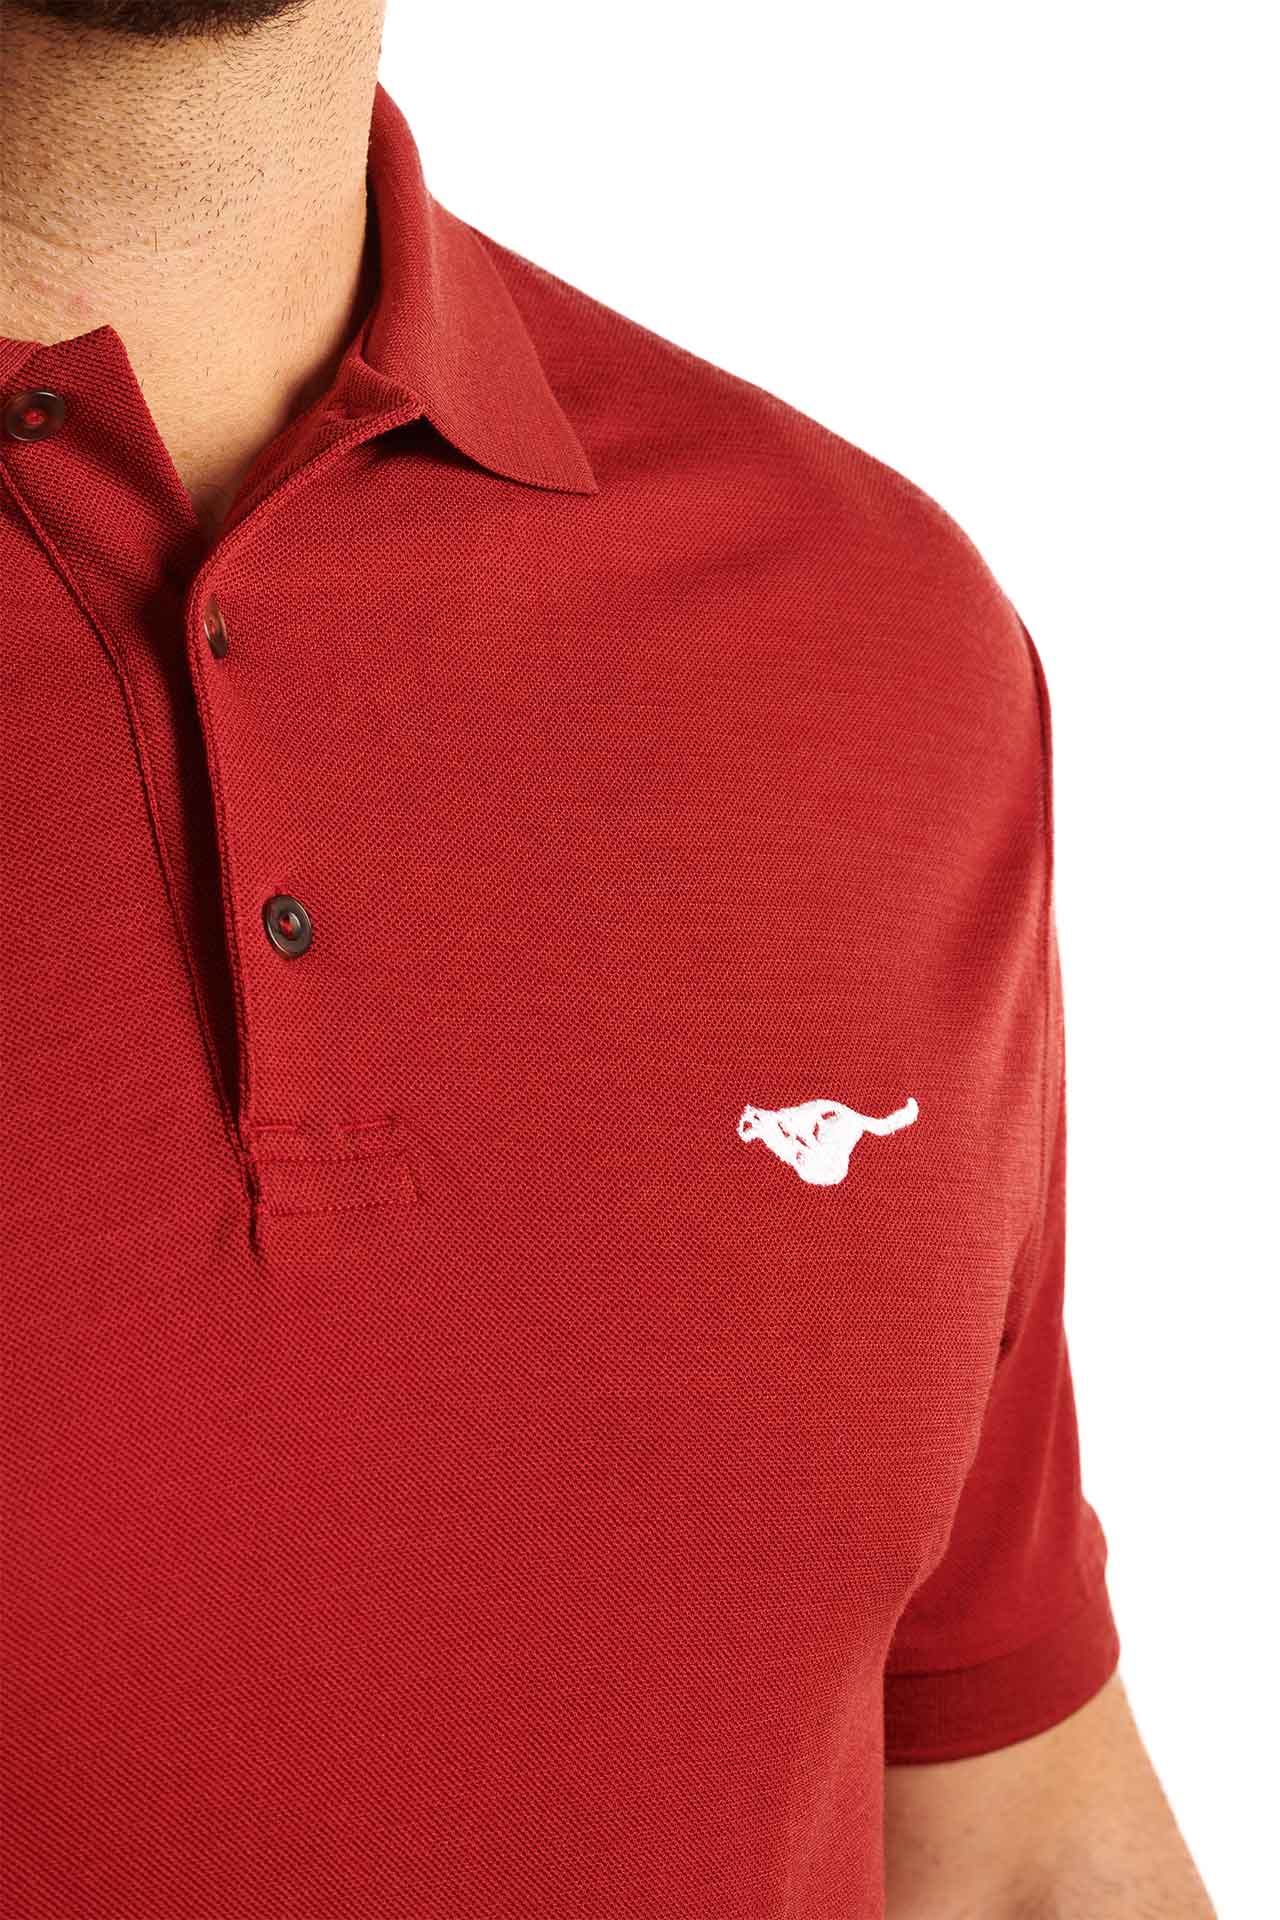 terra-red-biodegradable-pure-merino-wool-golf-polo-shirt-for men-by-snöleo.-collar-model-closeup-view.